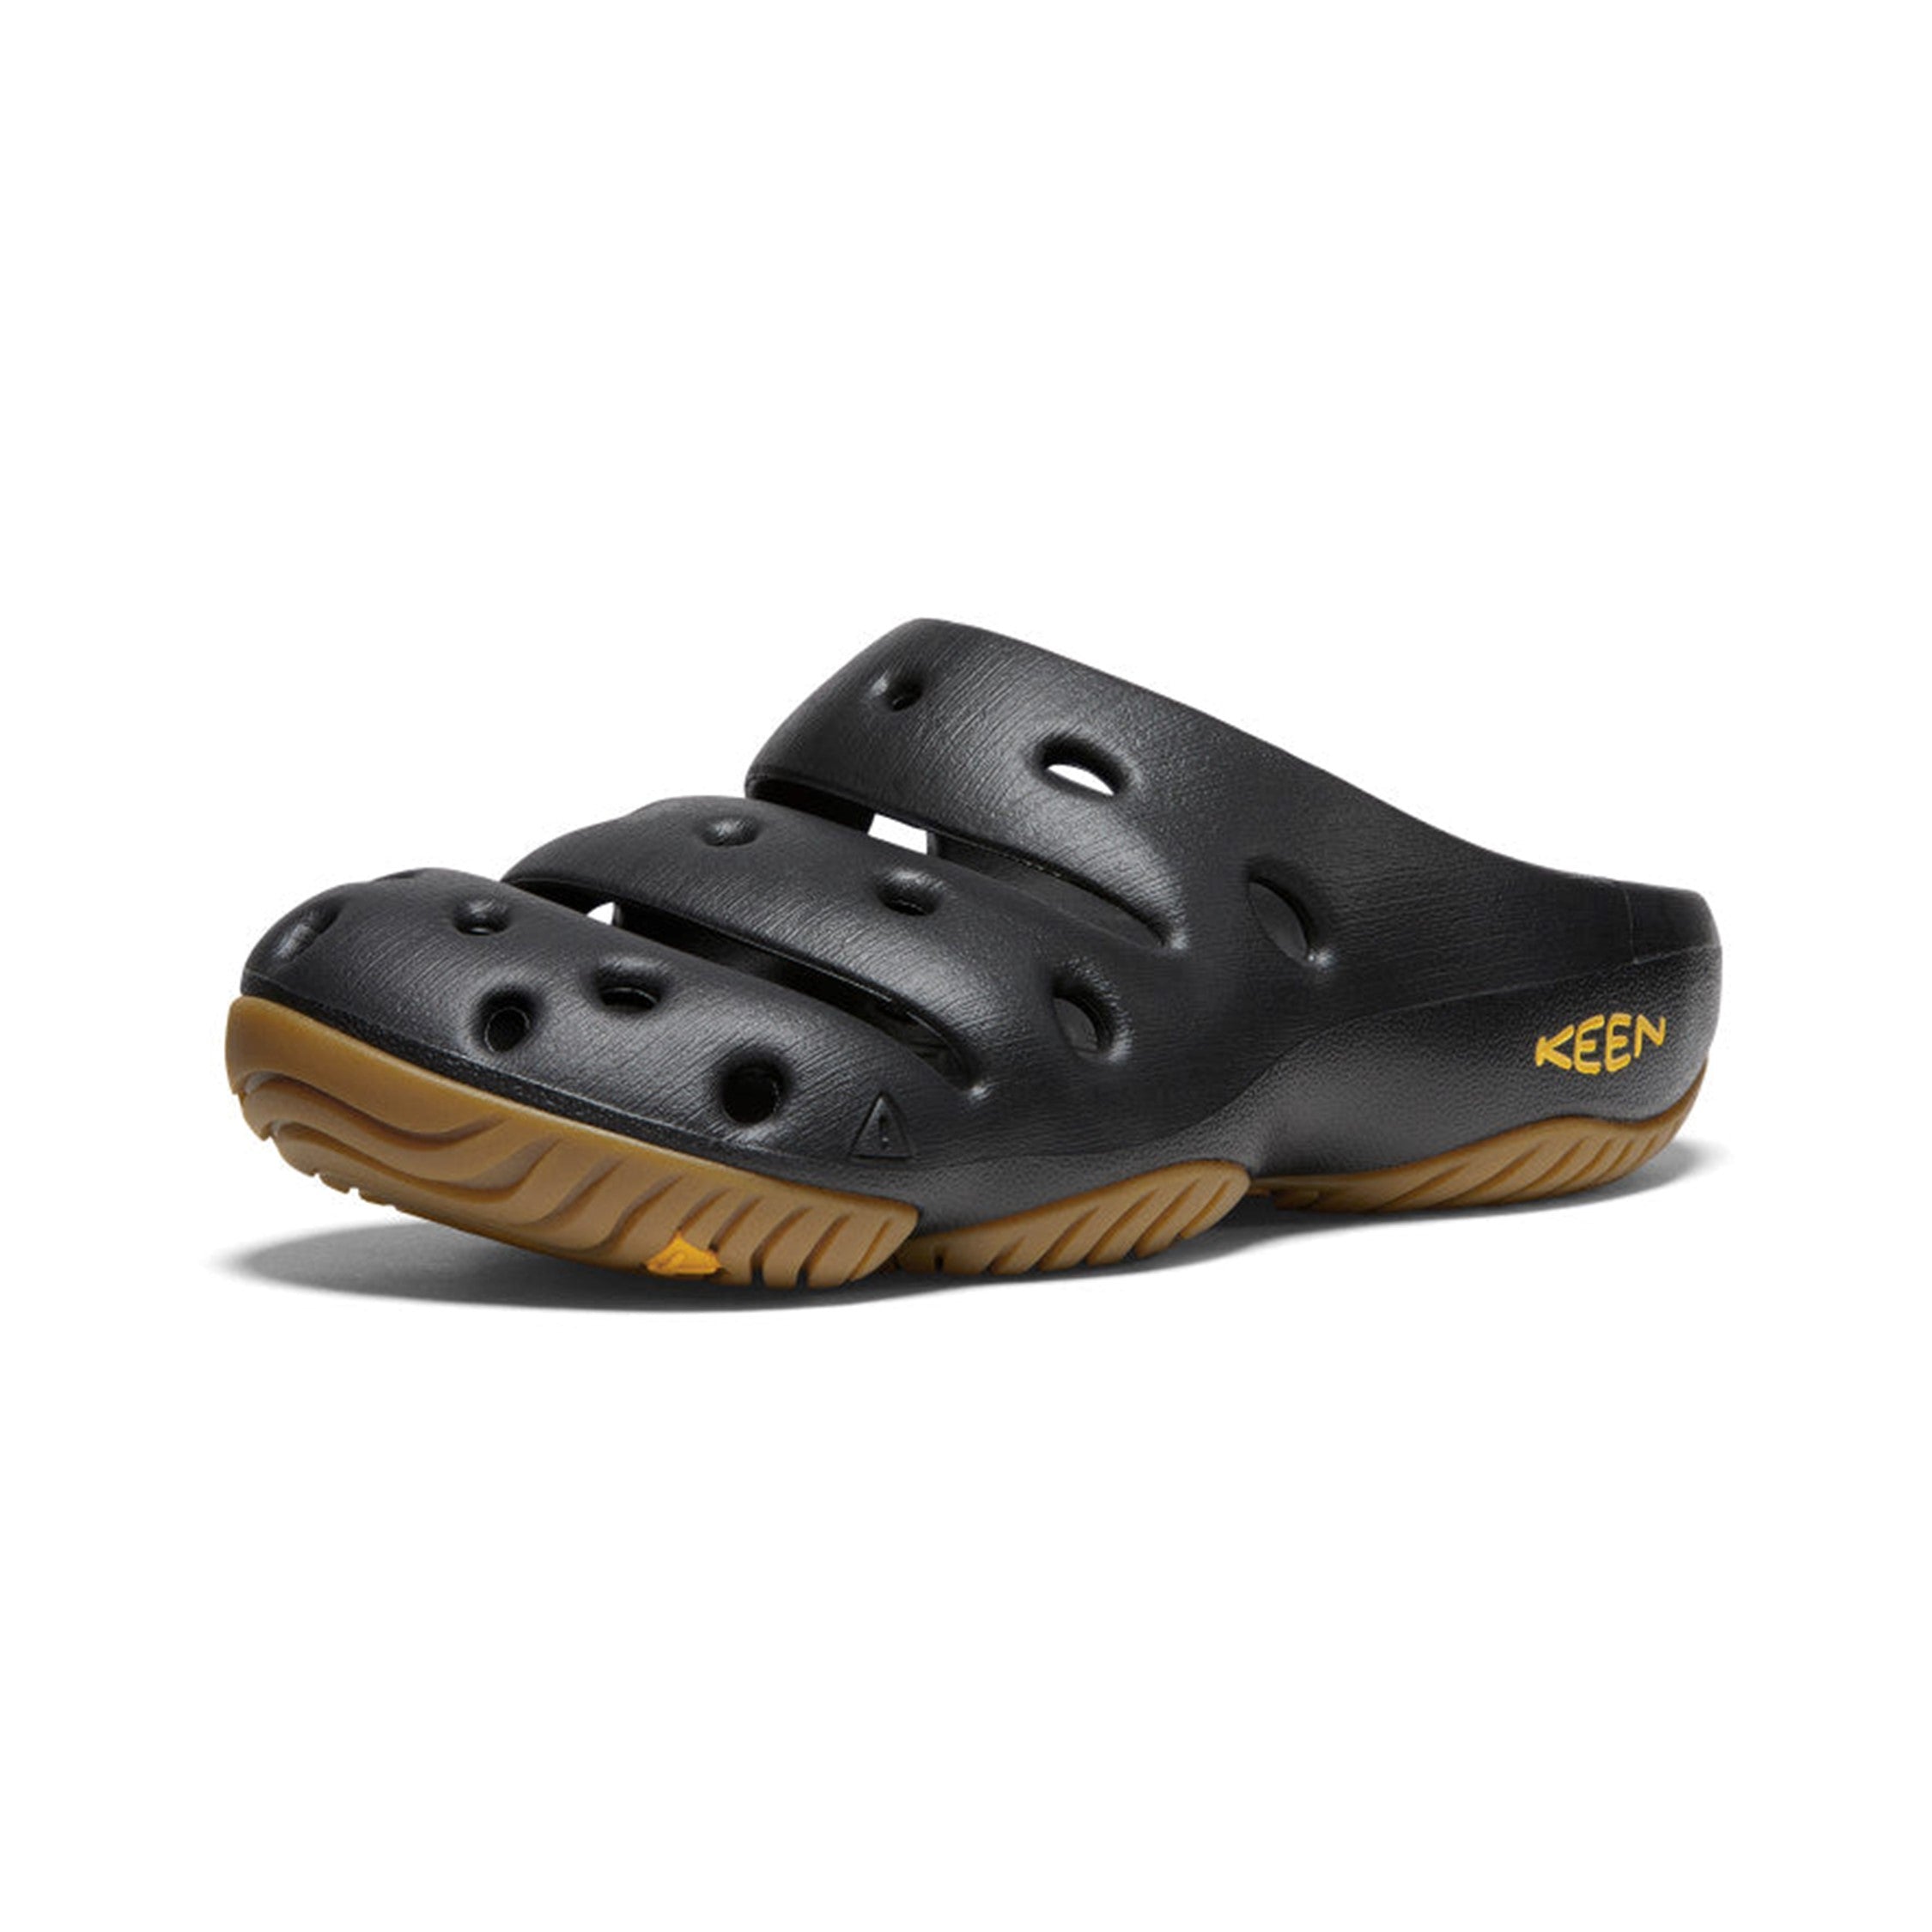 Yogui Men's Slip-on Clog Shoes - Black